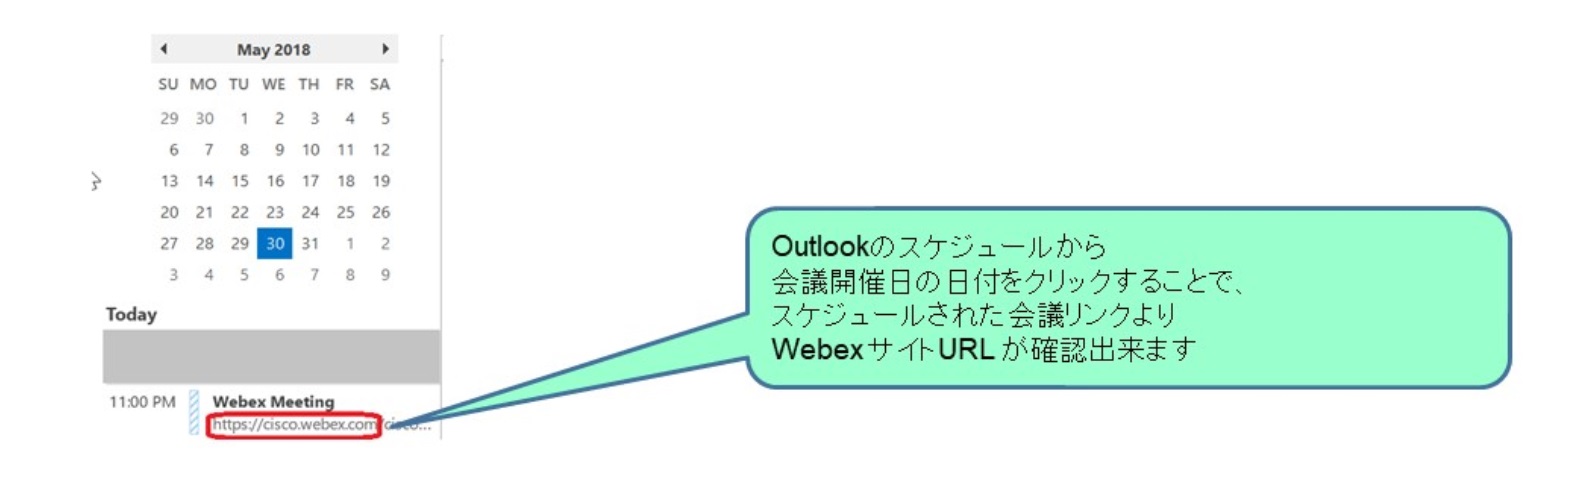 Webex サイトURL の確認方法 - Cisco Community